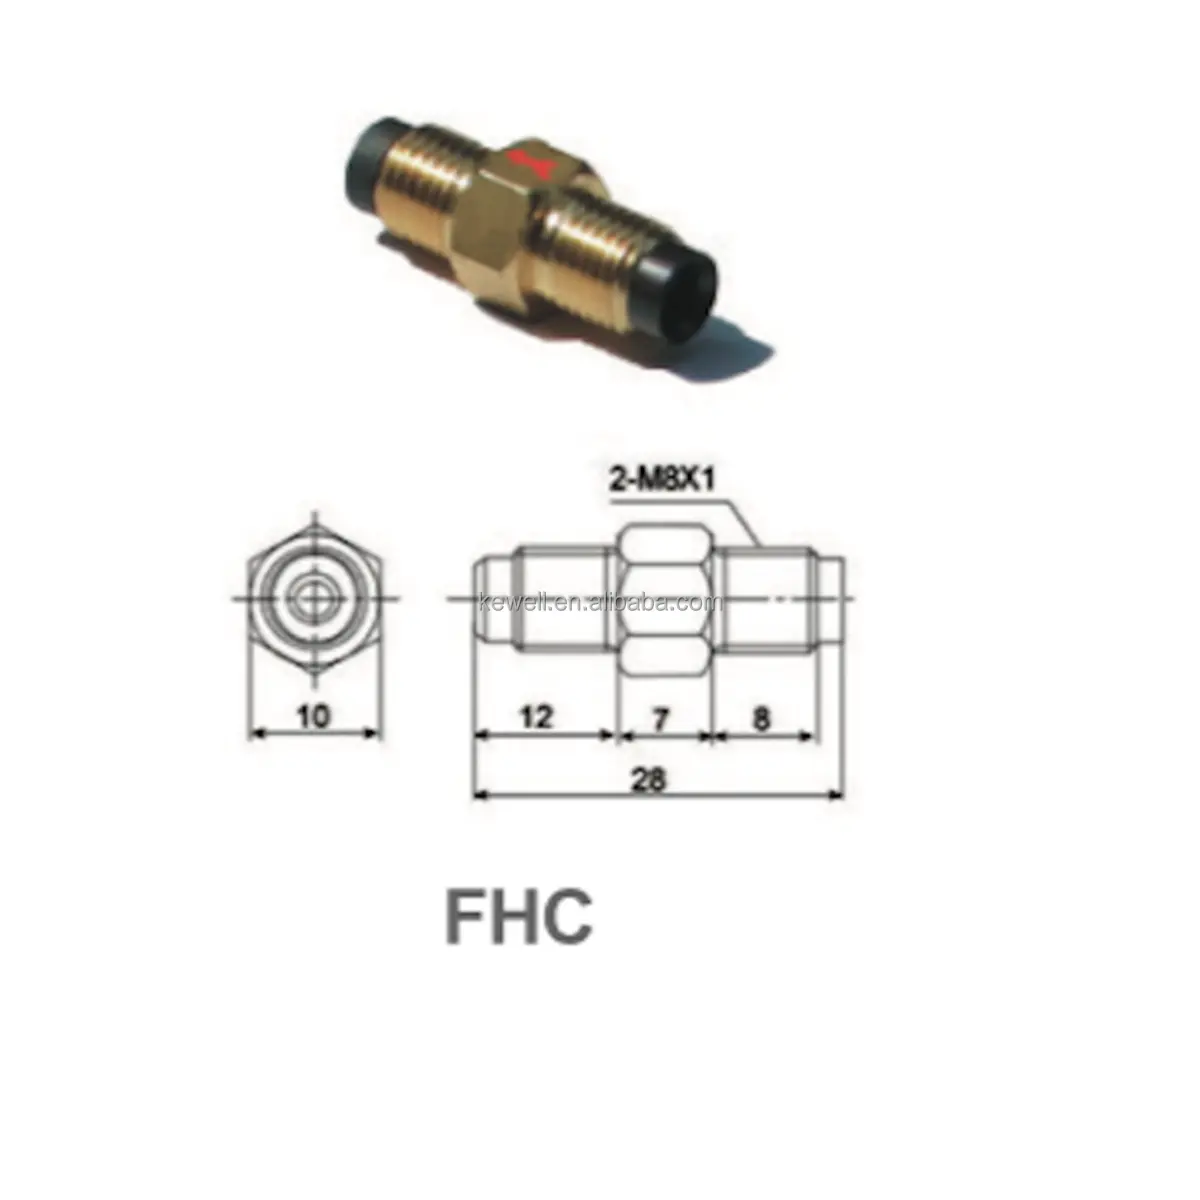 FHC Lubrificante Oil Flow Meter Pipe Meter Unidades Quantitative Injector Pipe Fitting Óleo ou Restritor Proporcional Rod